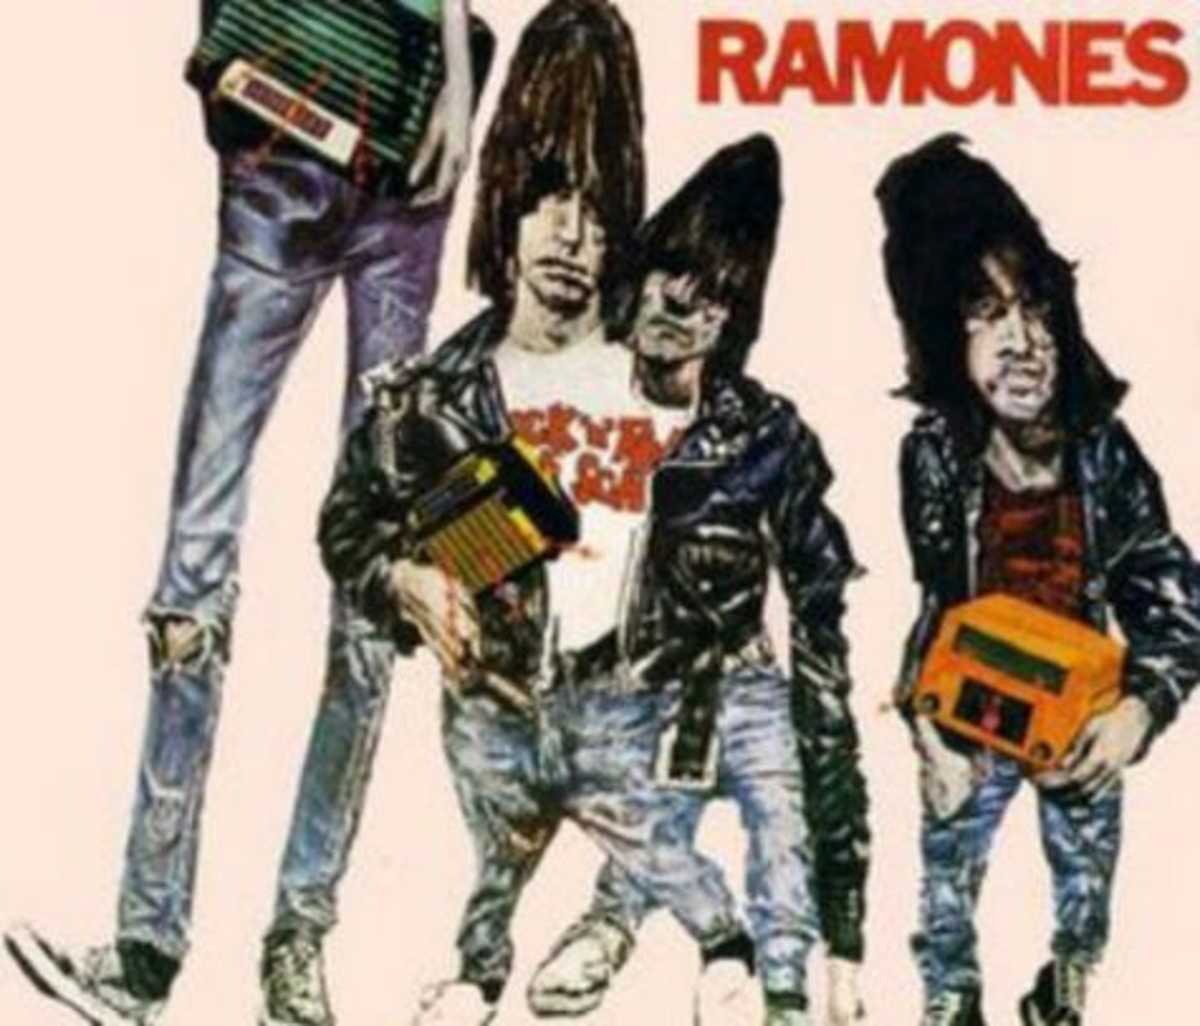 Ramones - Rock n roll radio